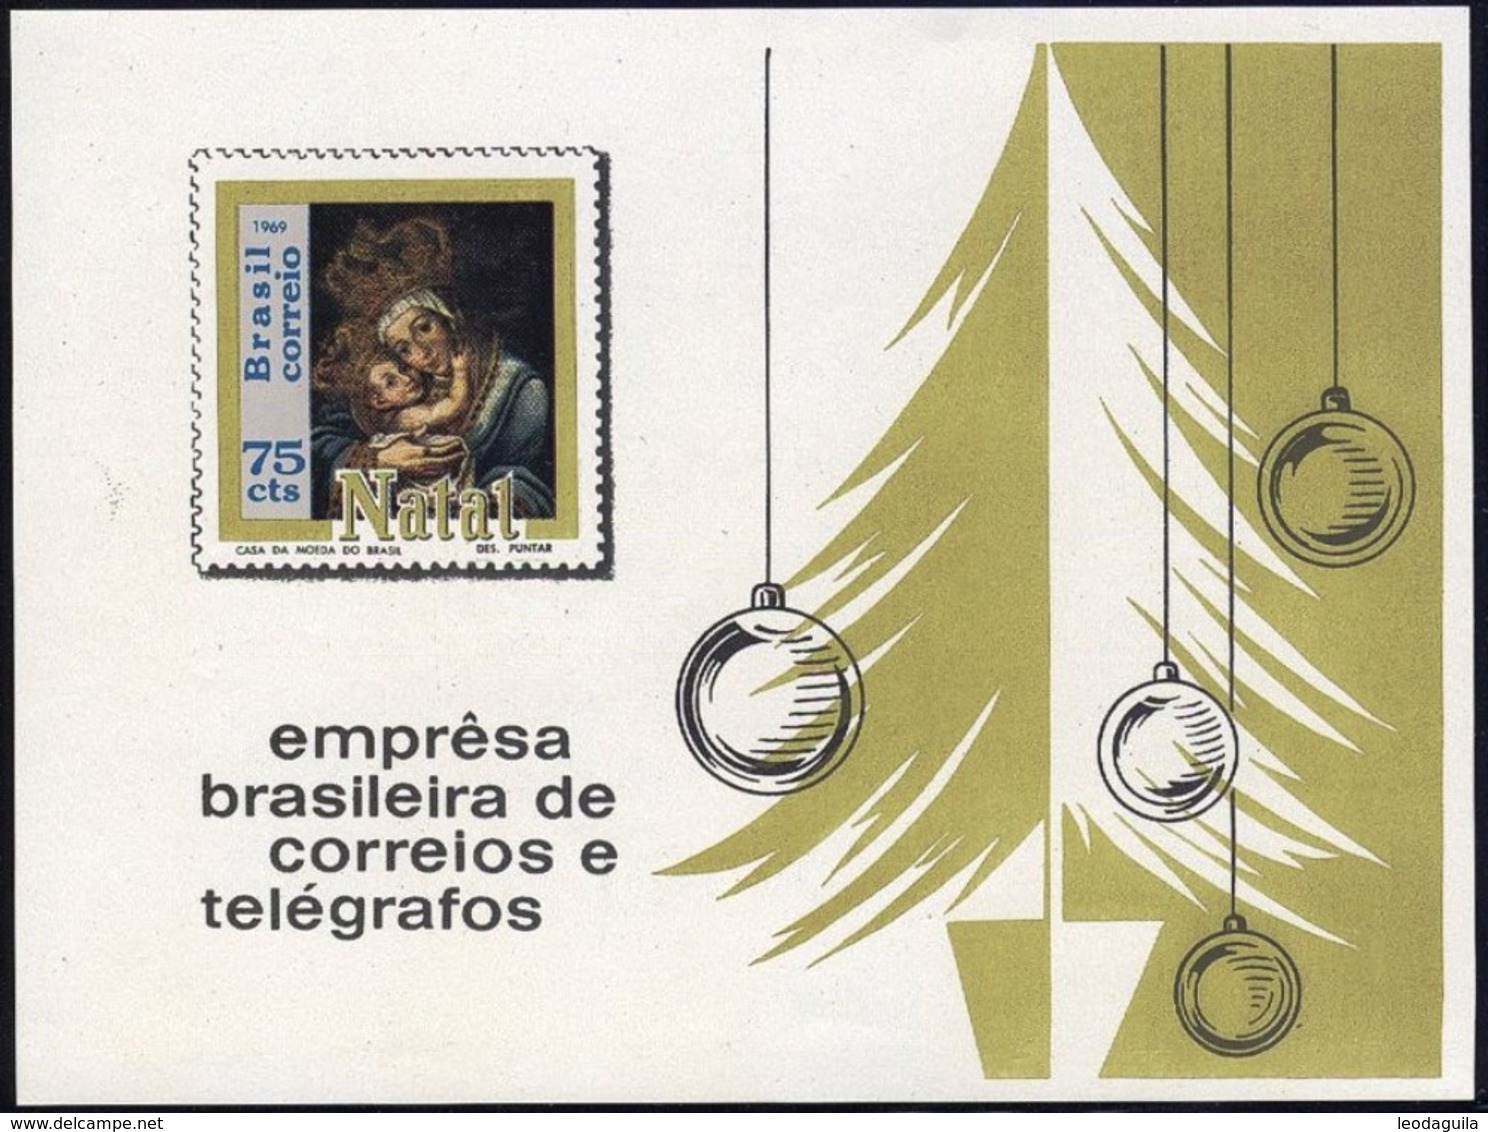 BRAZIL #1147 - CHRISTMAS -  NAVIDAD - NÖEL - MADONNA   -   IMPERFORATED  Souvenir Sheet  1969 - Mint - Unused Stamps